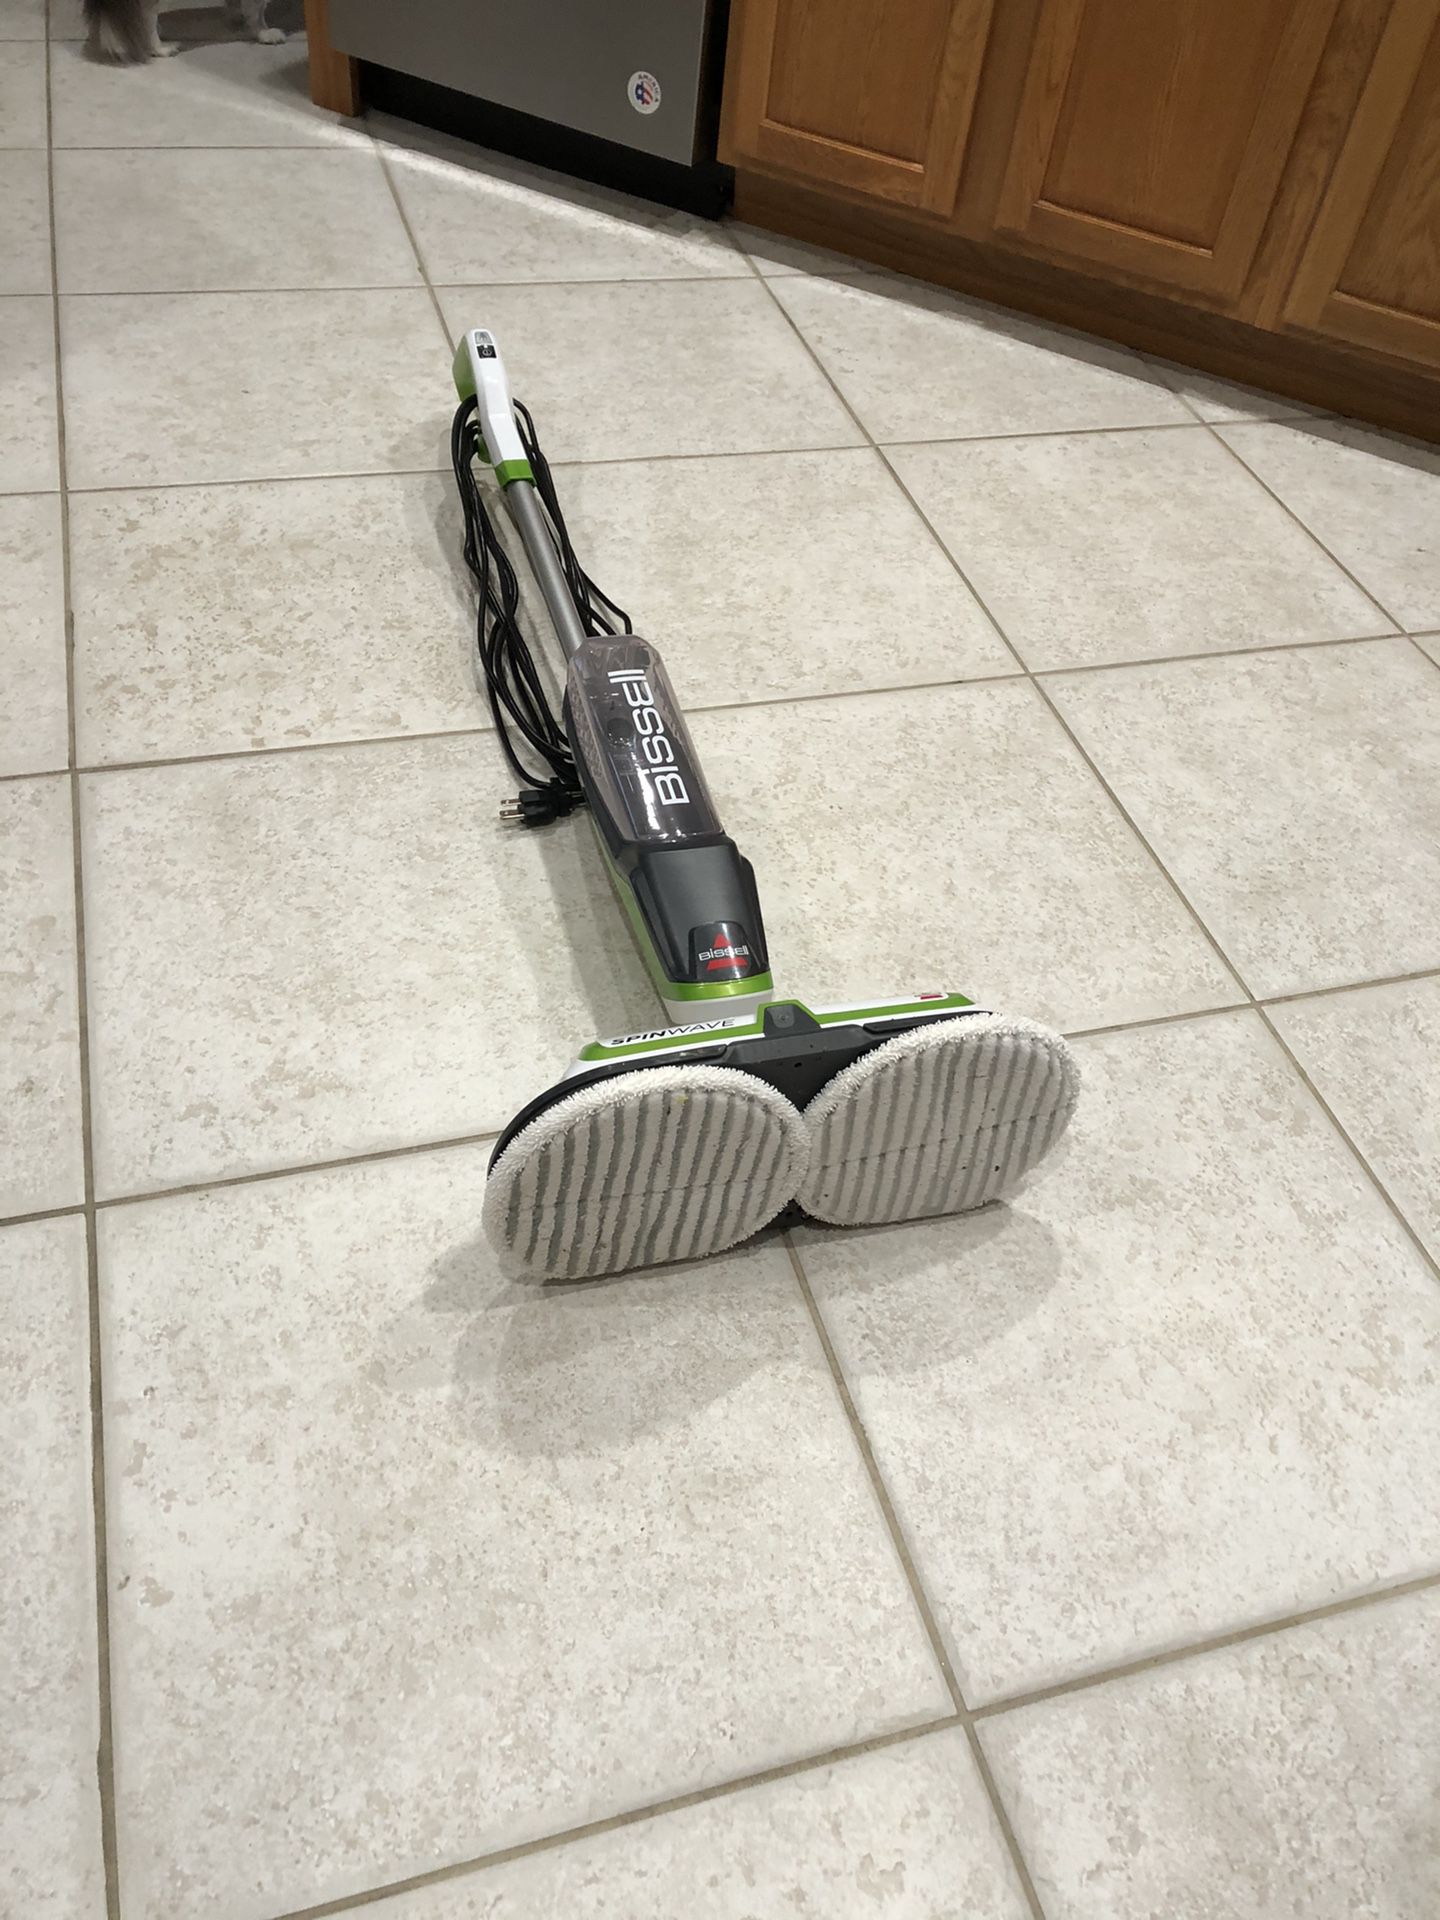 Bissell spinwave floor scrubber